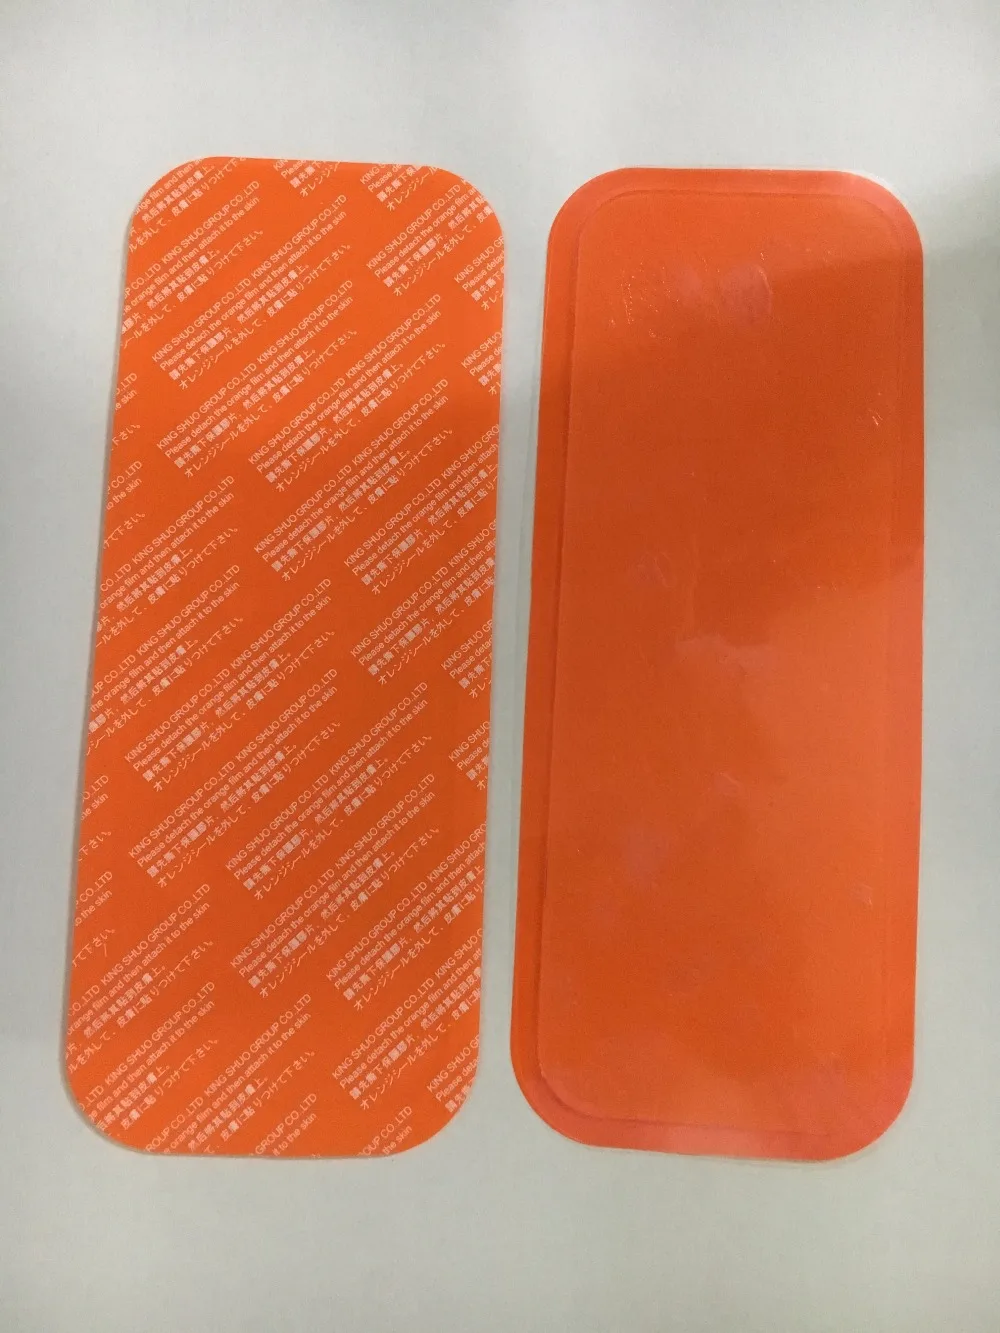 Aliexpress.com : Buy 12pcs (6sets)Orange conductivity Gel sheets pad